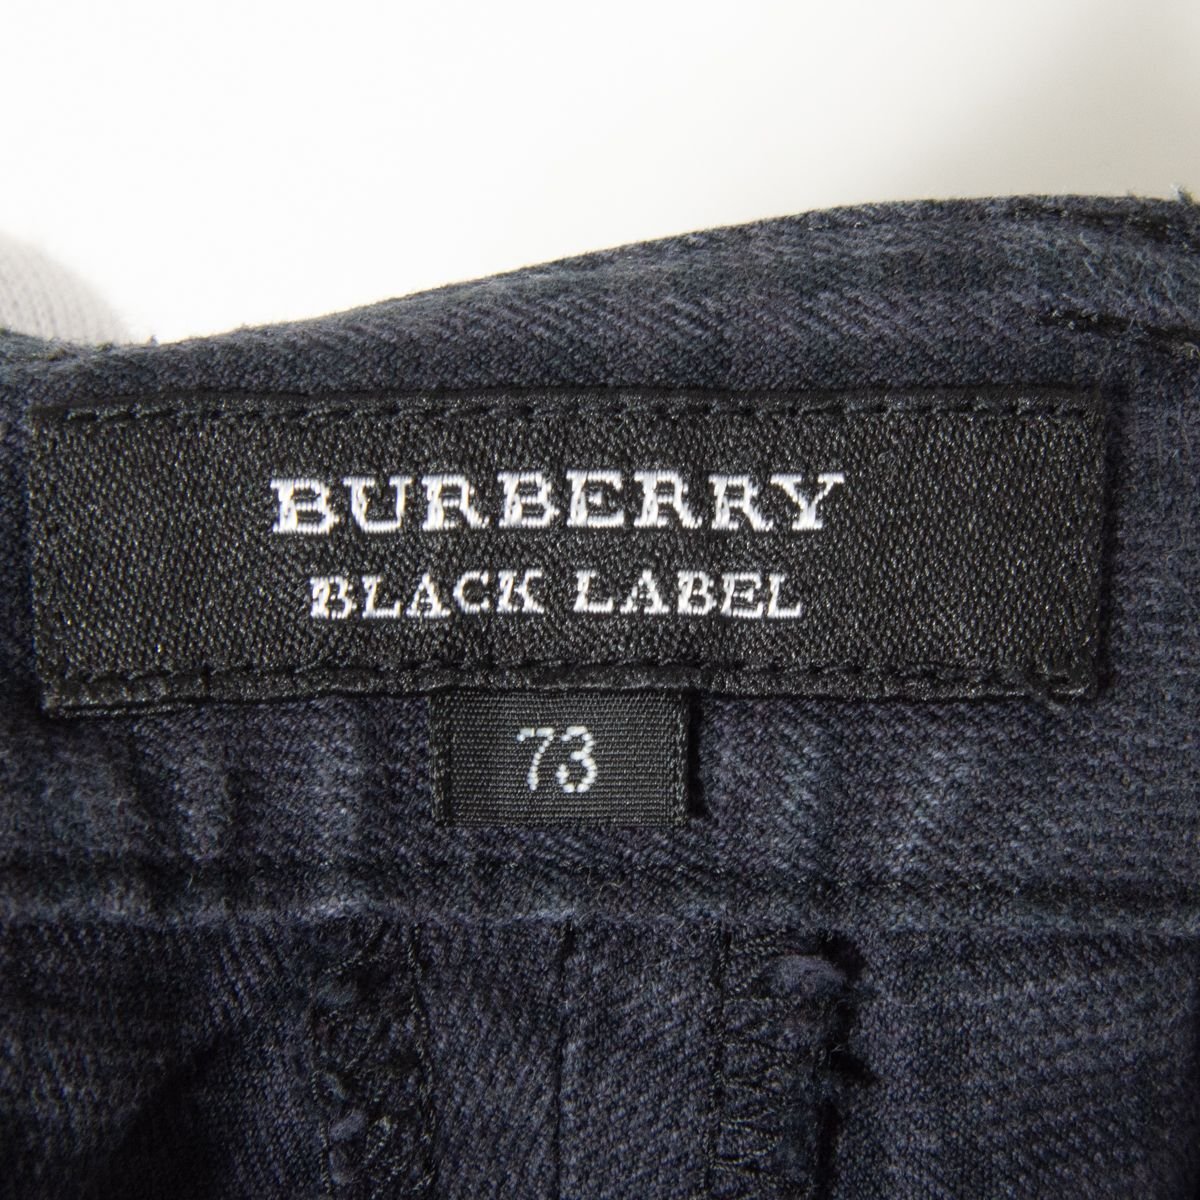 BURBERRY BLACK LABEL バーバリー ブラックレーベル サイズ73 チェック柄 パンツ ボトムス コットン混 紺/ネイビー系 メンズ カジュアル_画像6